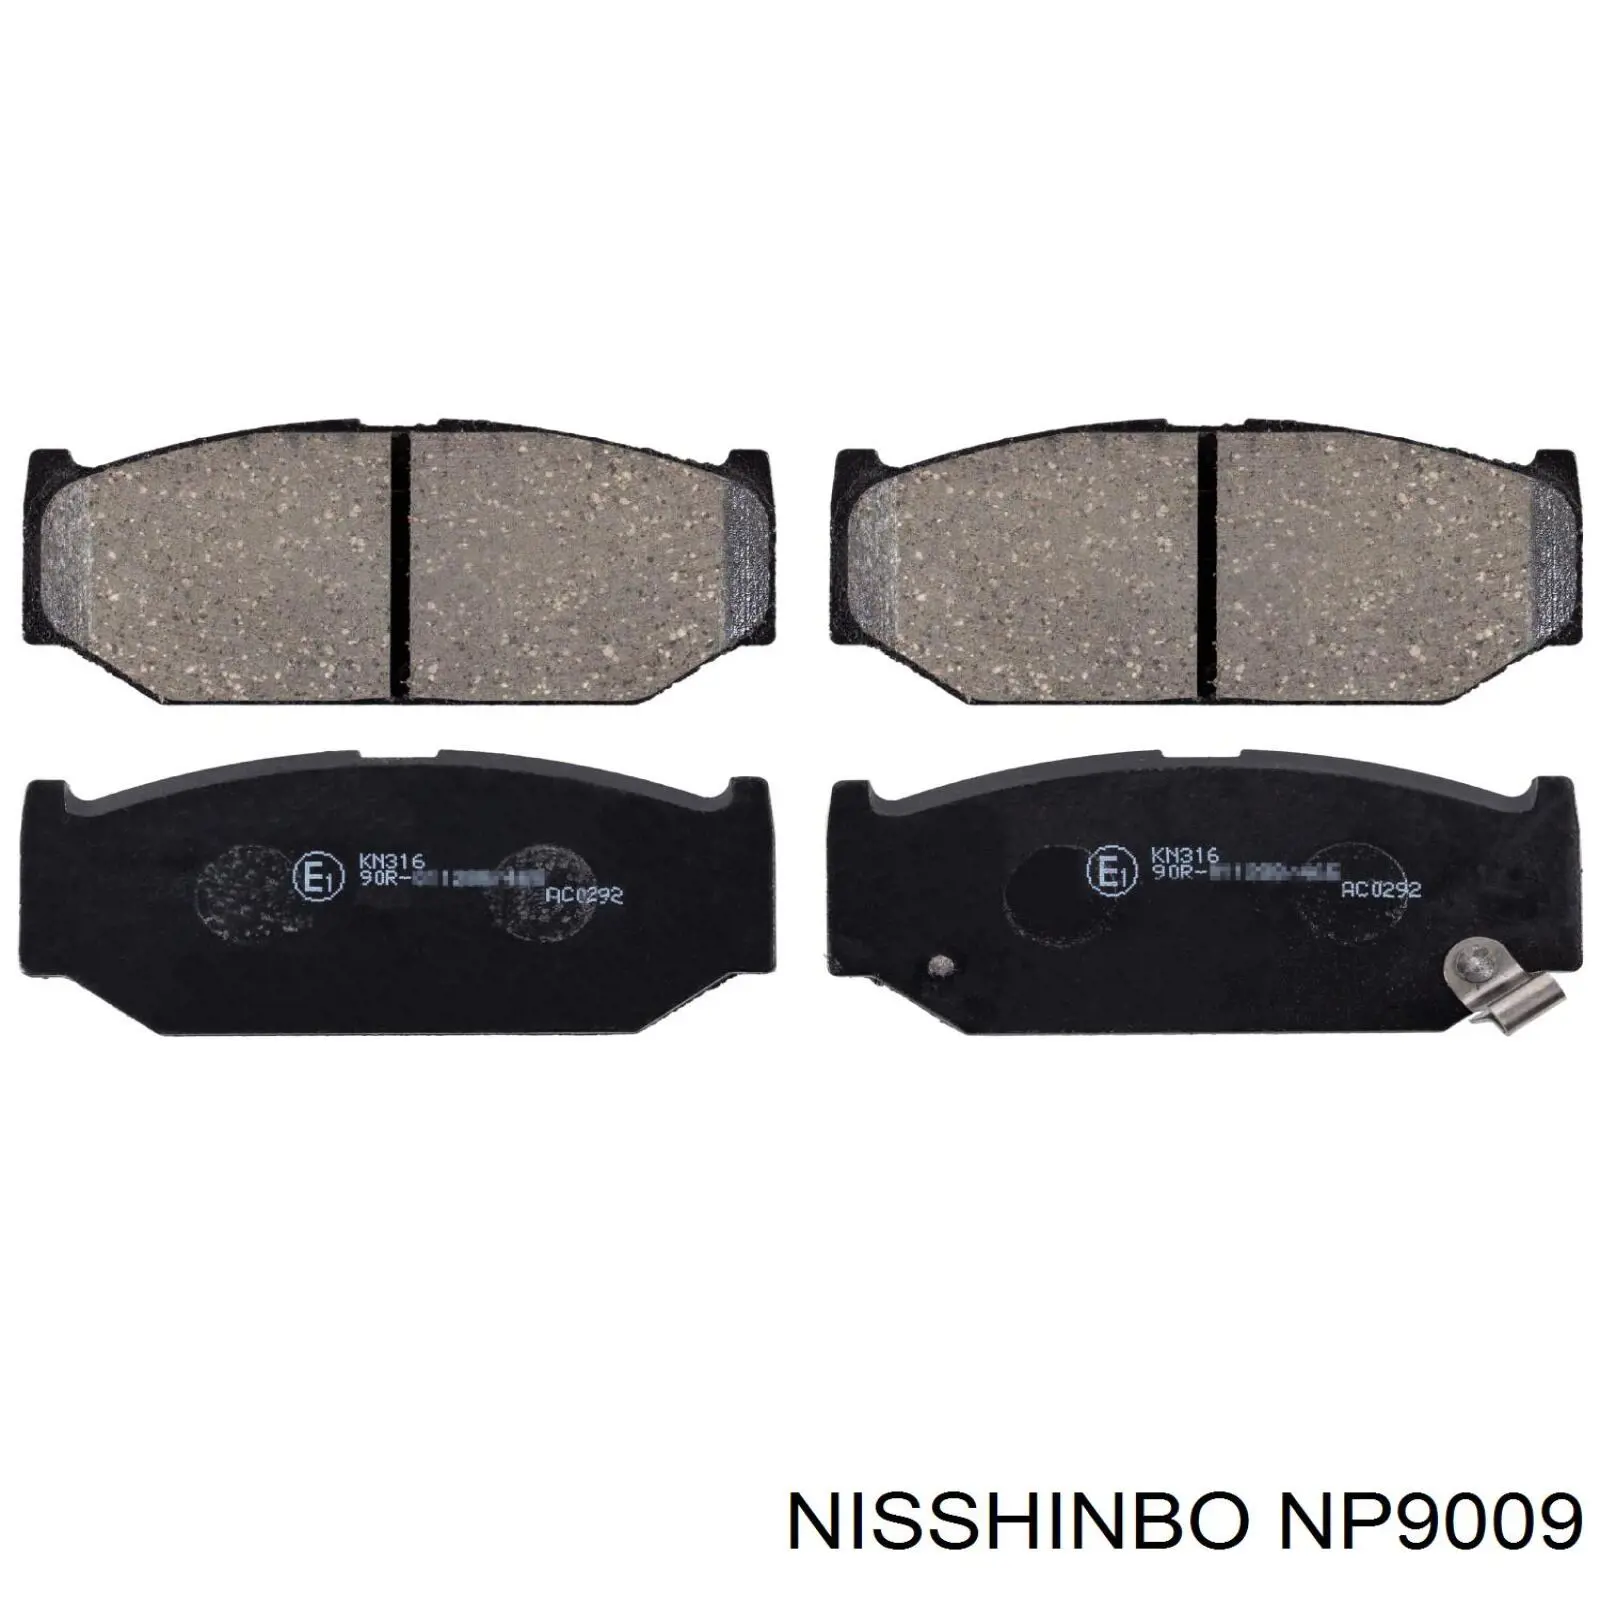 NP9009 Nisshinbo pastillas de freno delanteras